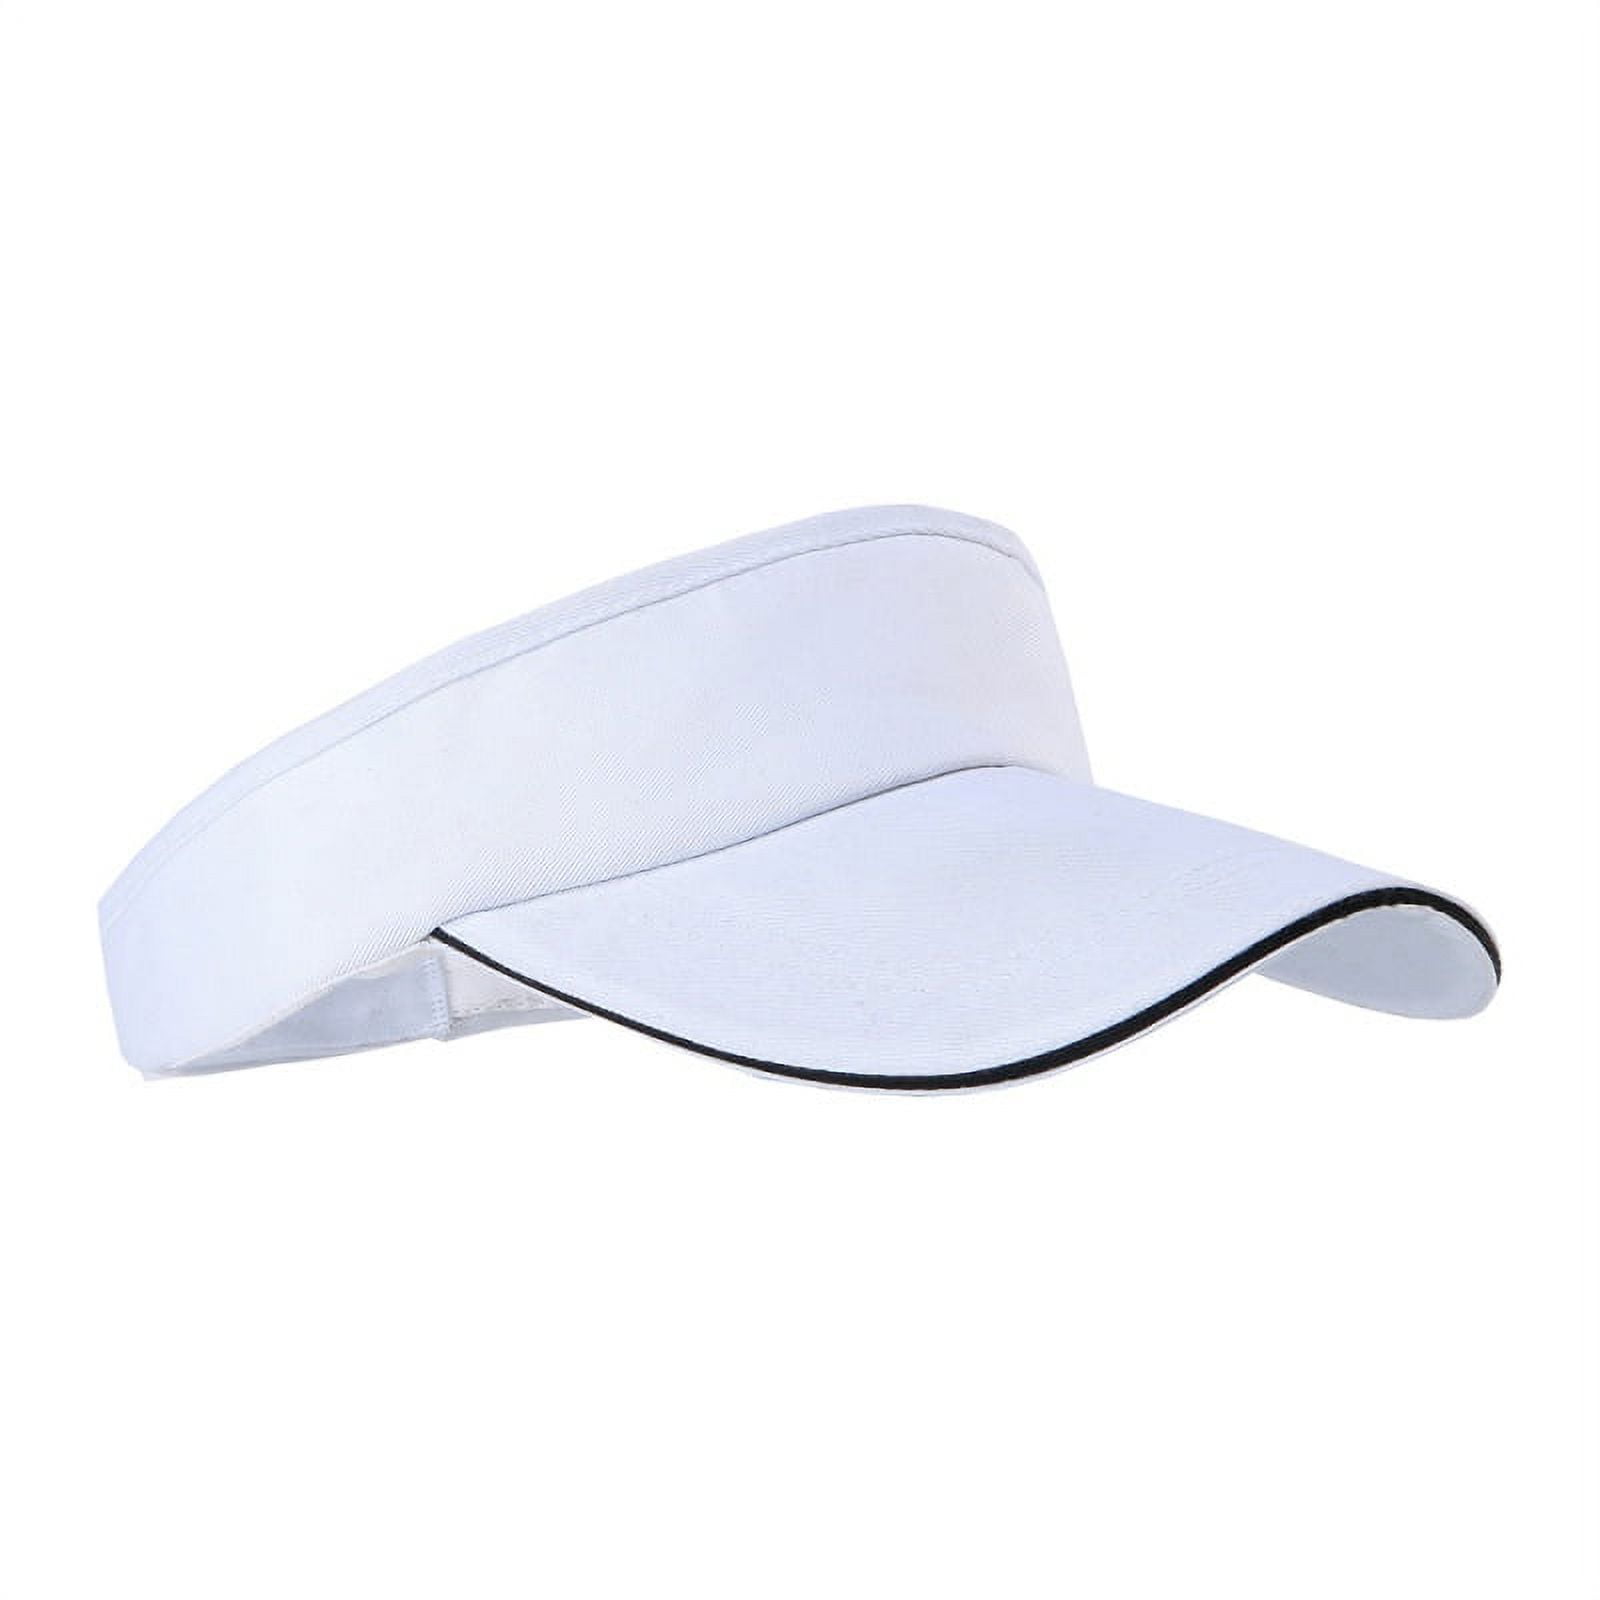 Summer Solid Color Cotton Breathable Tennis Hat Visor Cap